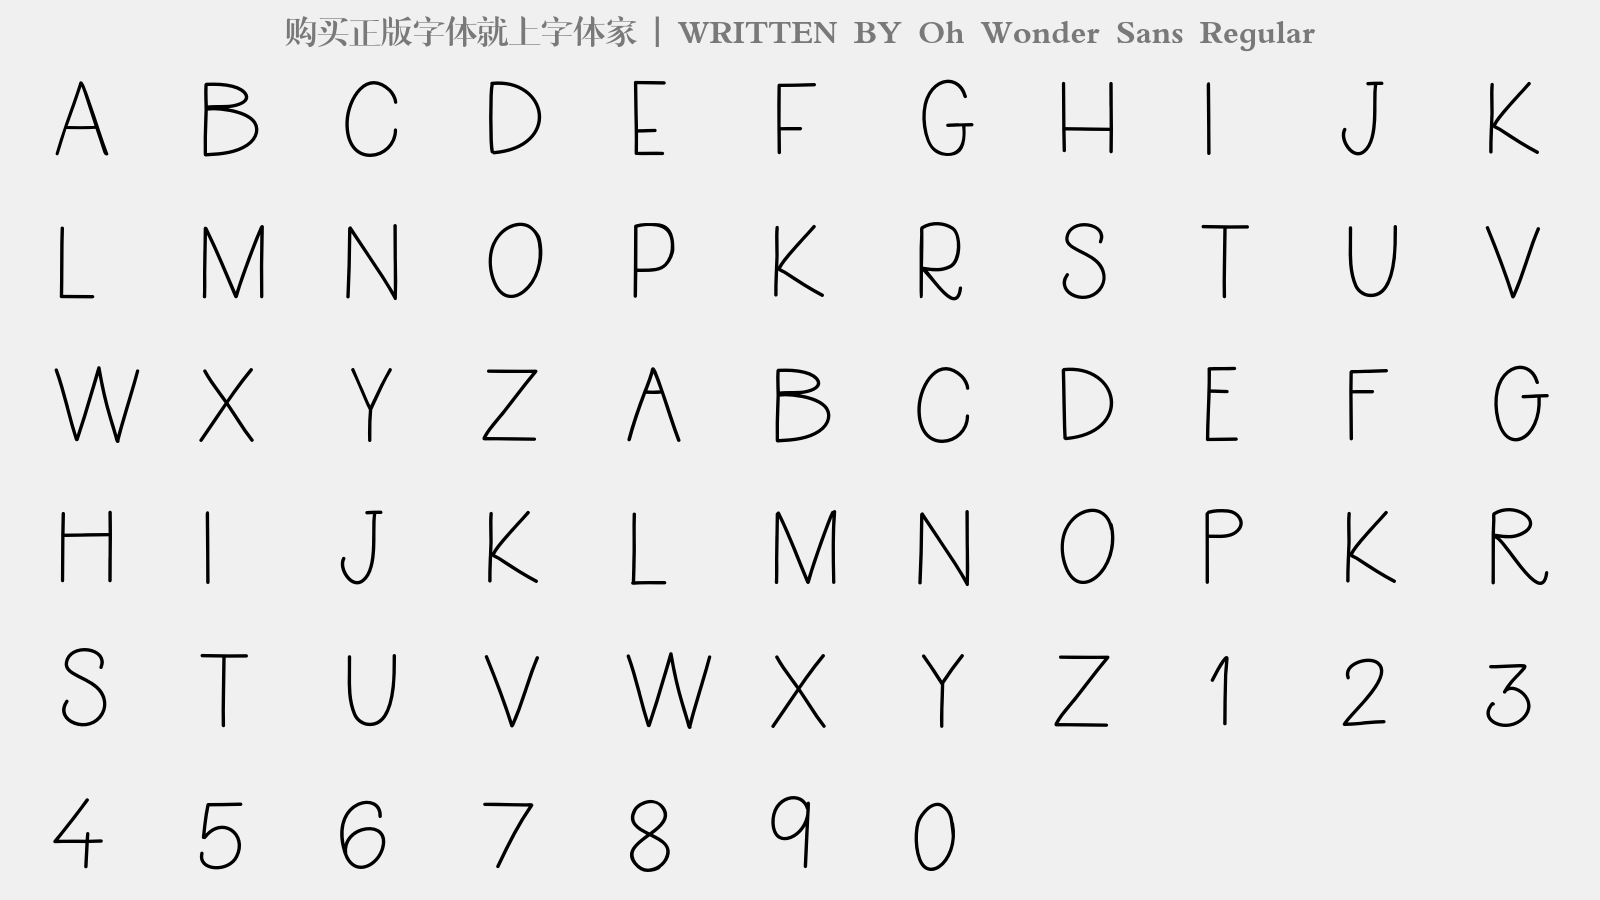 Oh Wonder Sans Regular - 大写字母/小写字母/数字